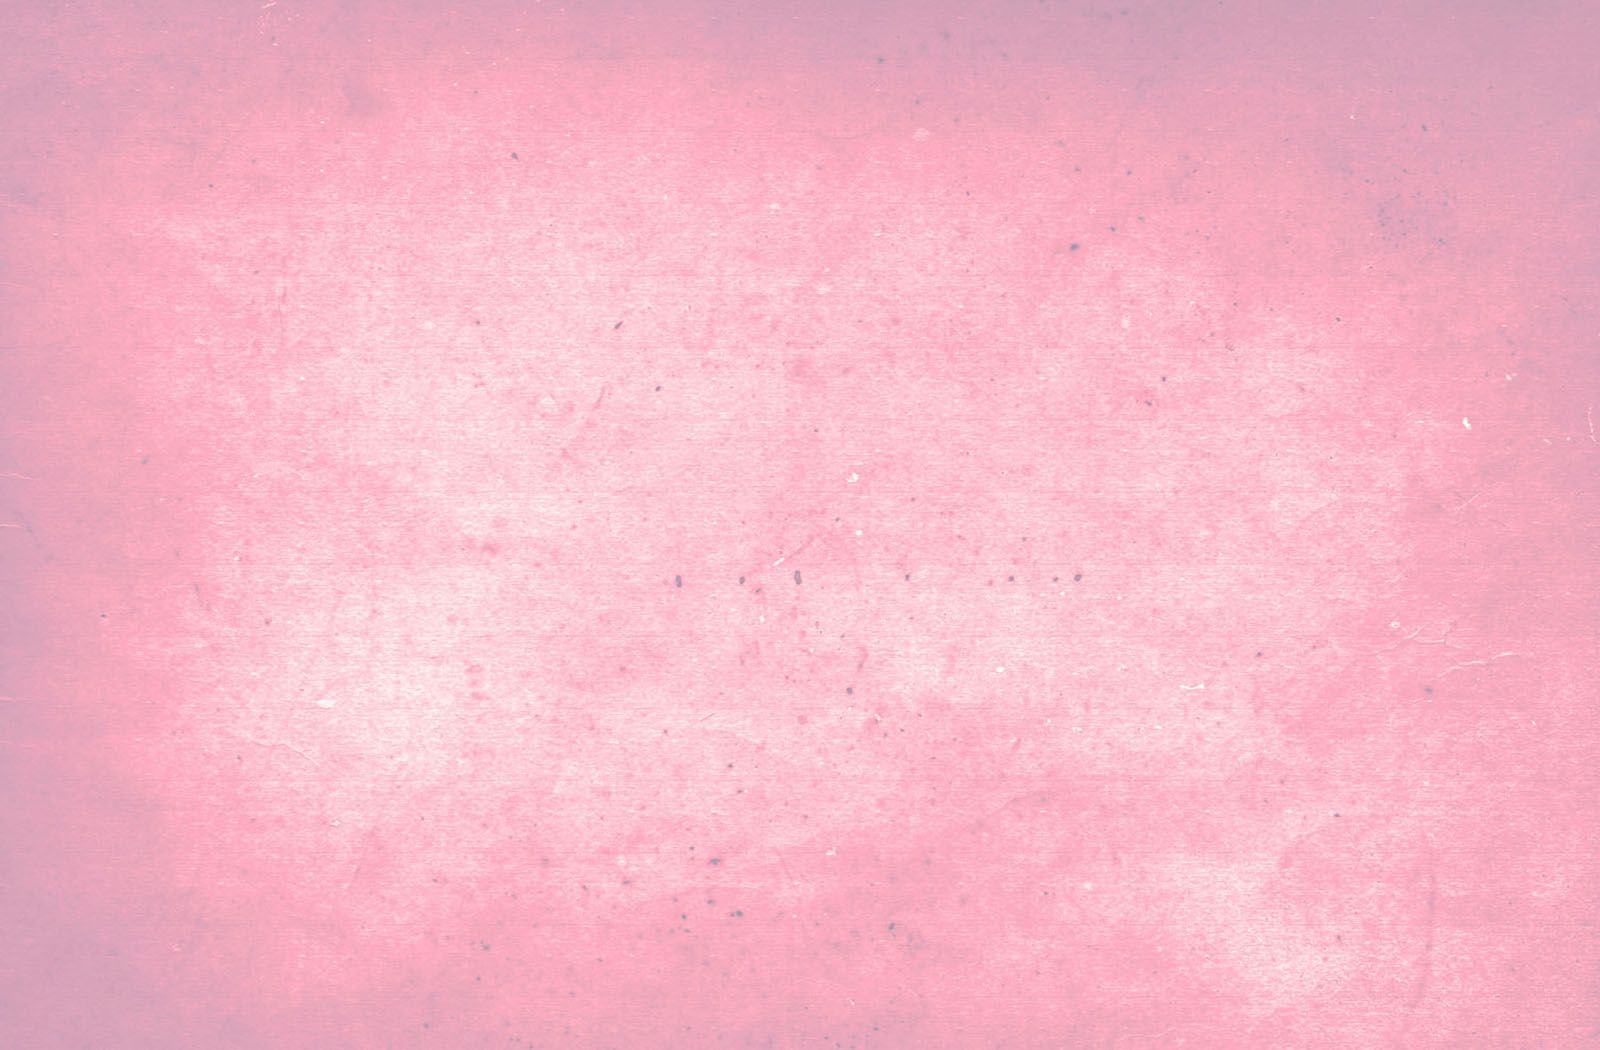 Pink Wallpaper Tumblr Fotolip.com Rich image and wallpaper